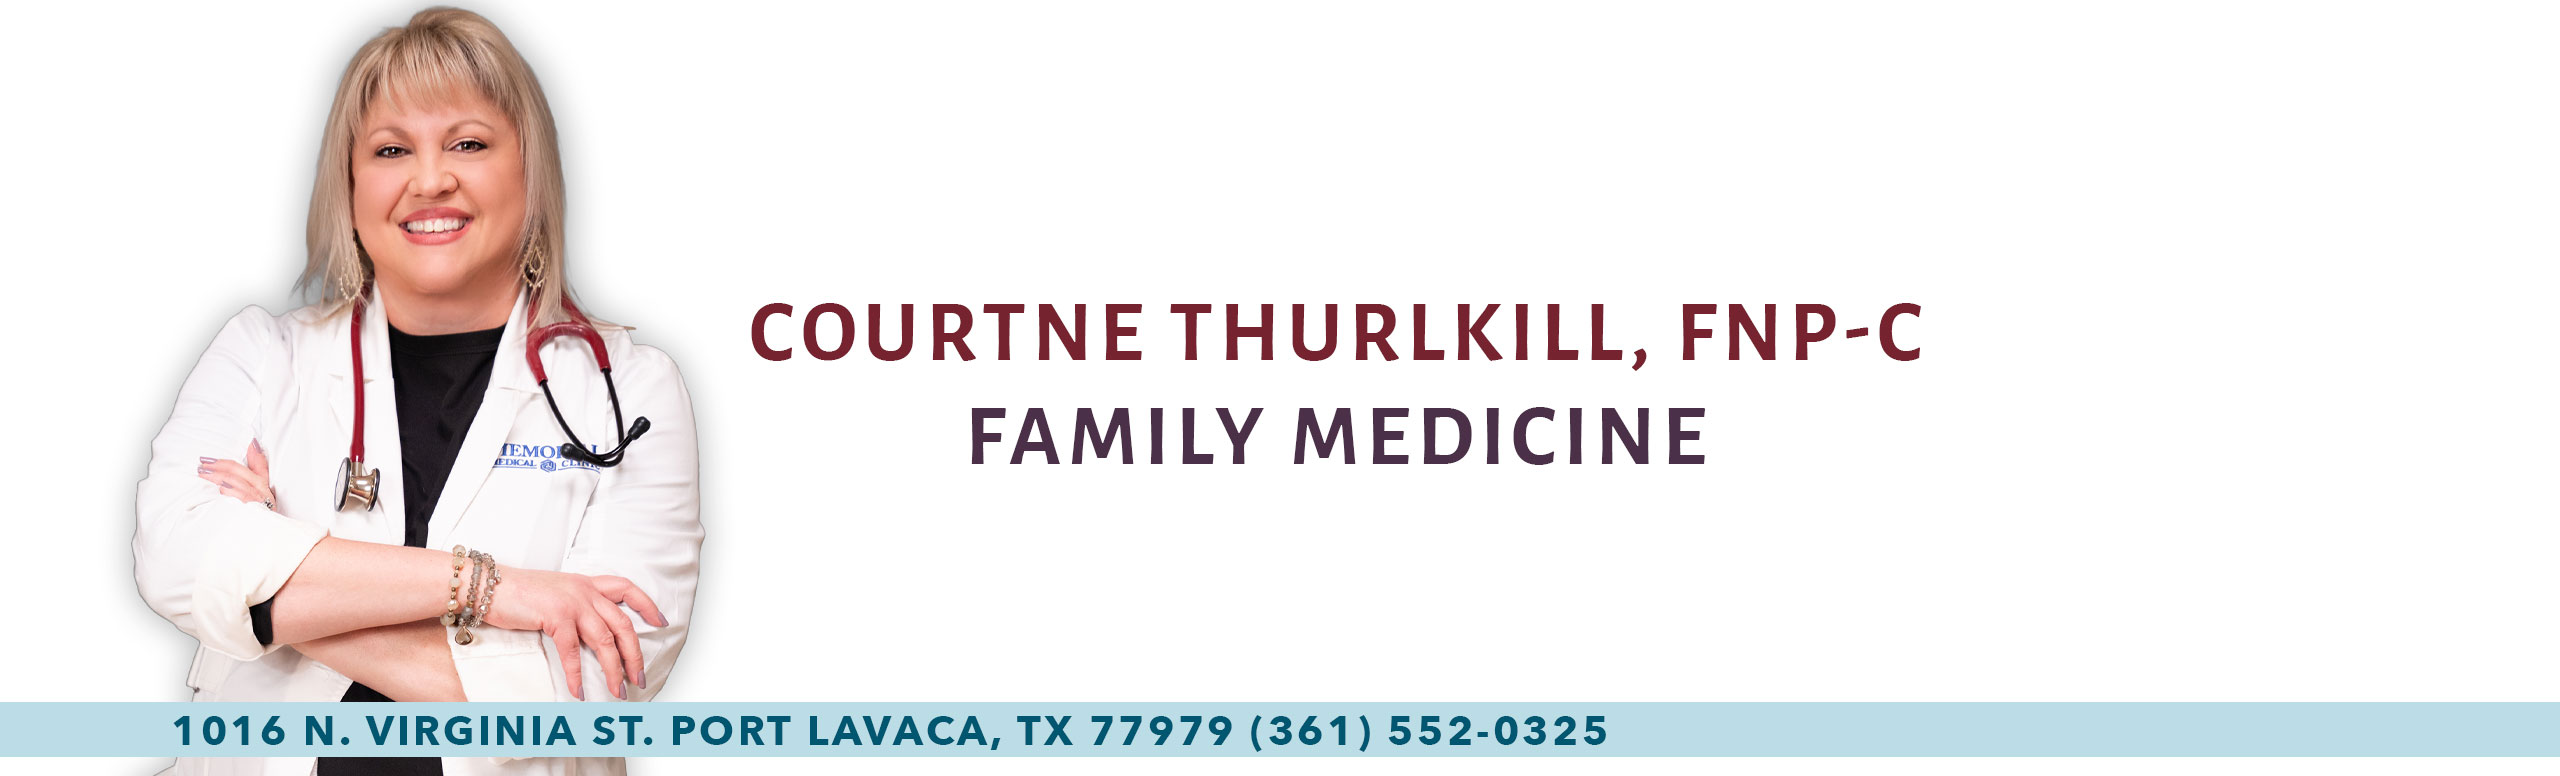 Courtne Thurlkill, FNP
Family Medicine